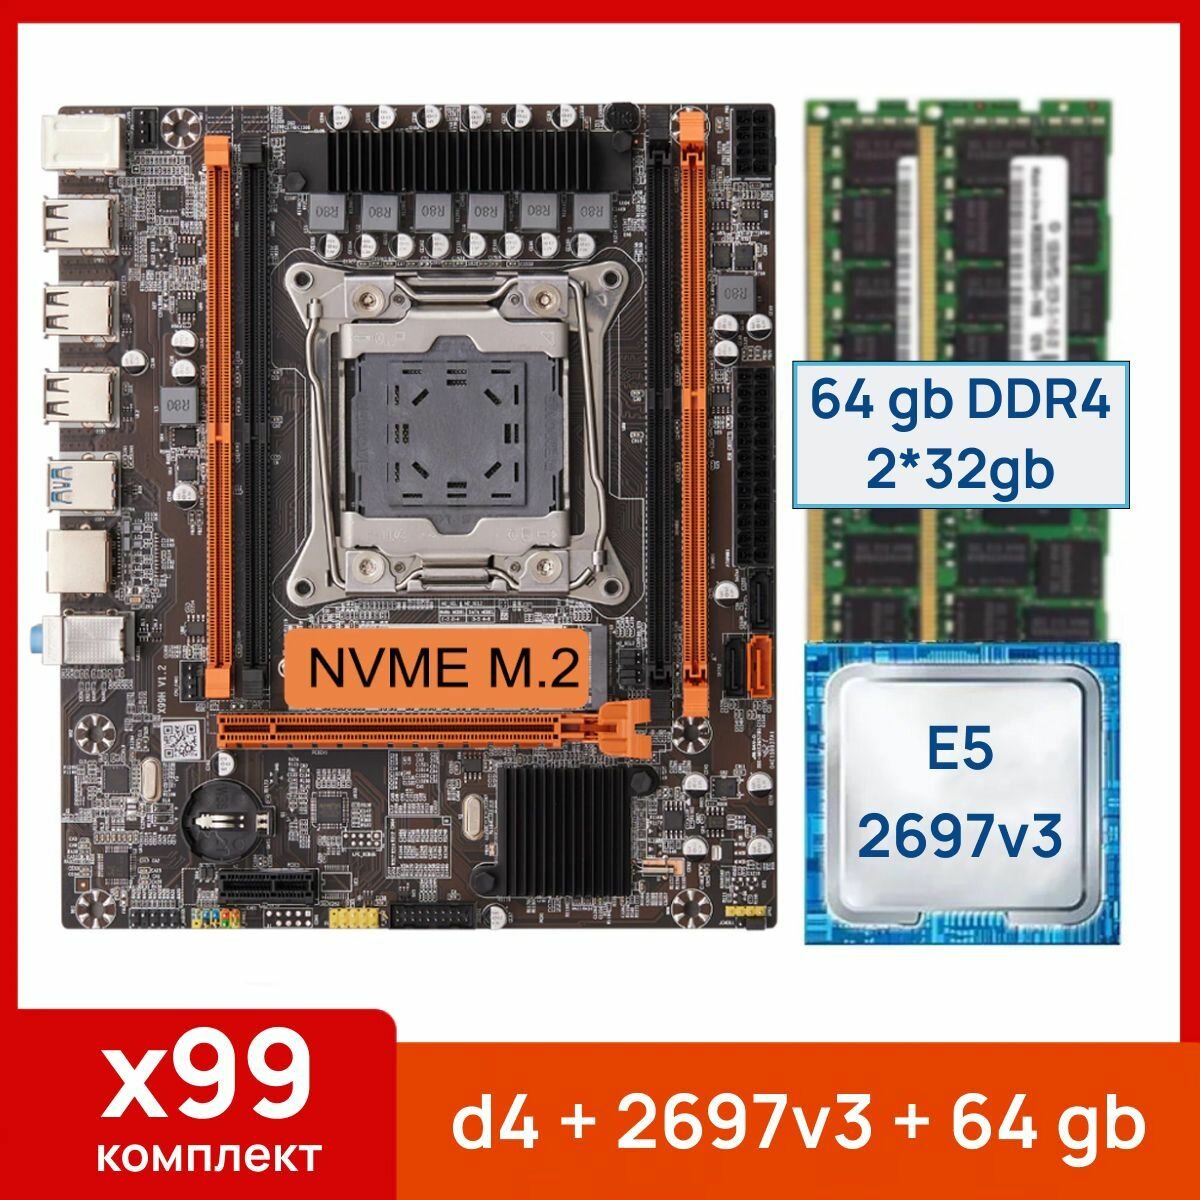 Комплект: Atermiter x99 d4 + Xeon E5 2697v3 + 64 gb(2x32gb) DDR4 ecc reg